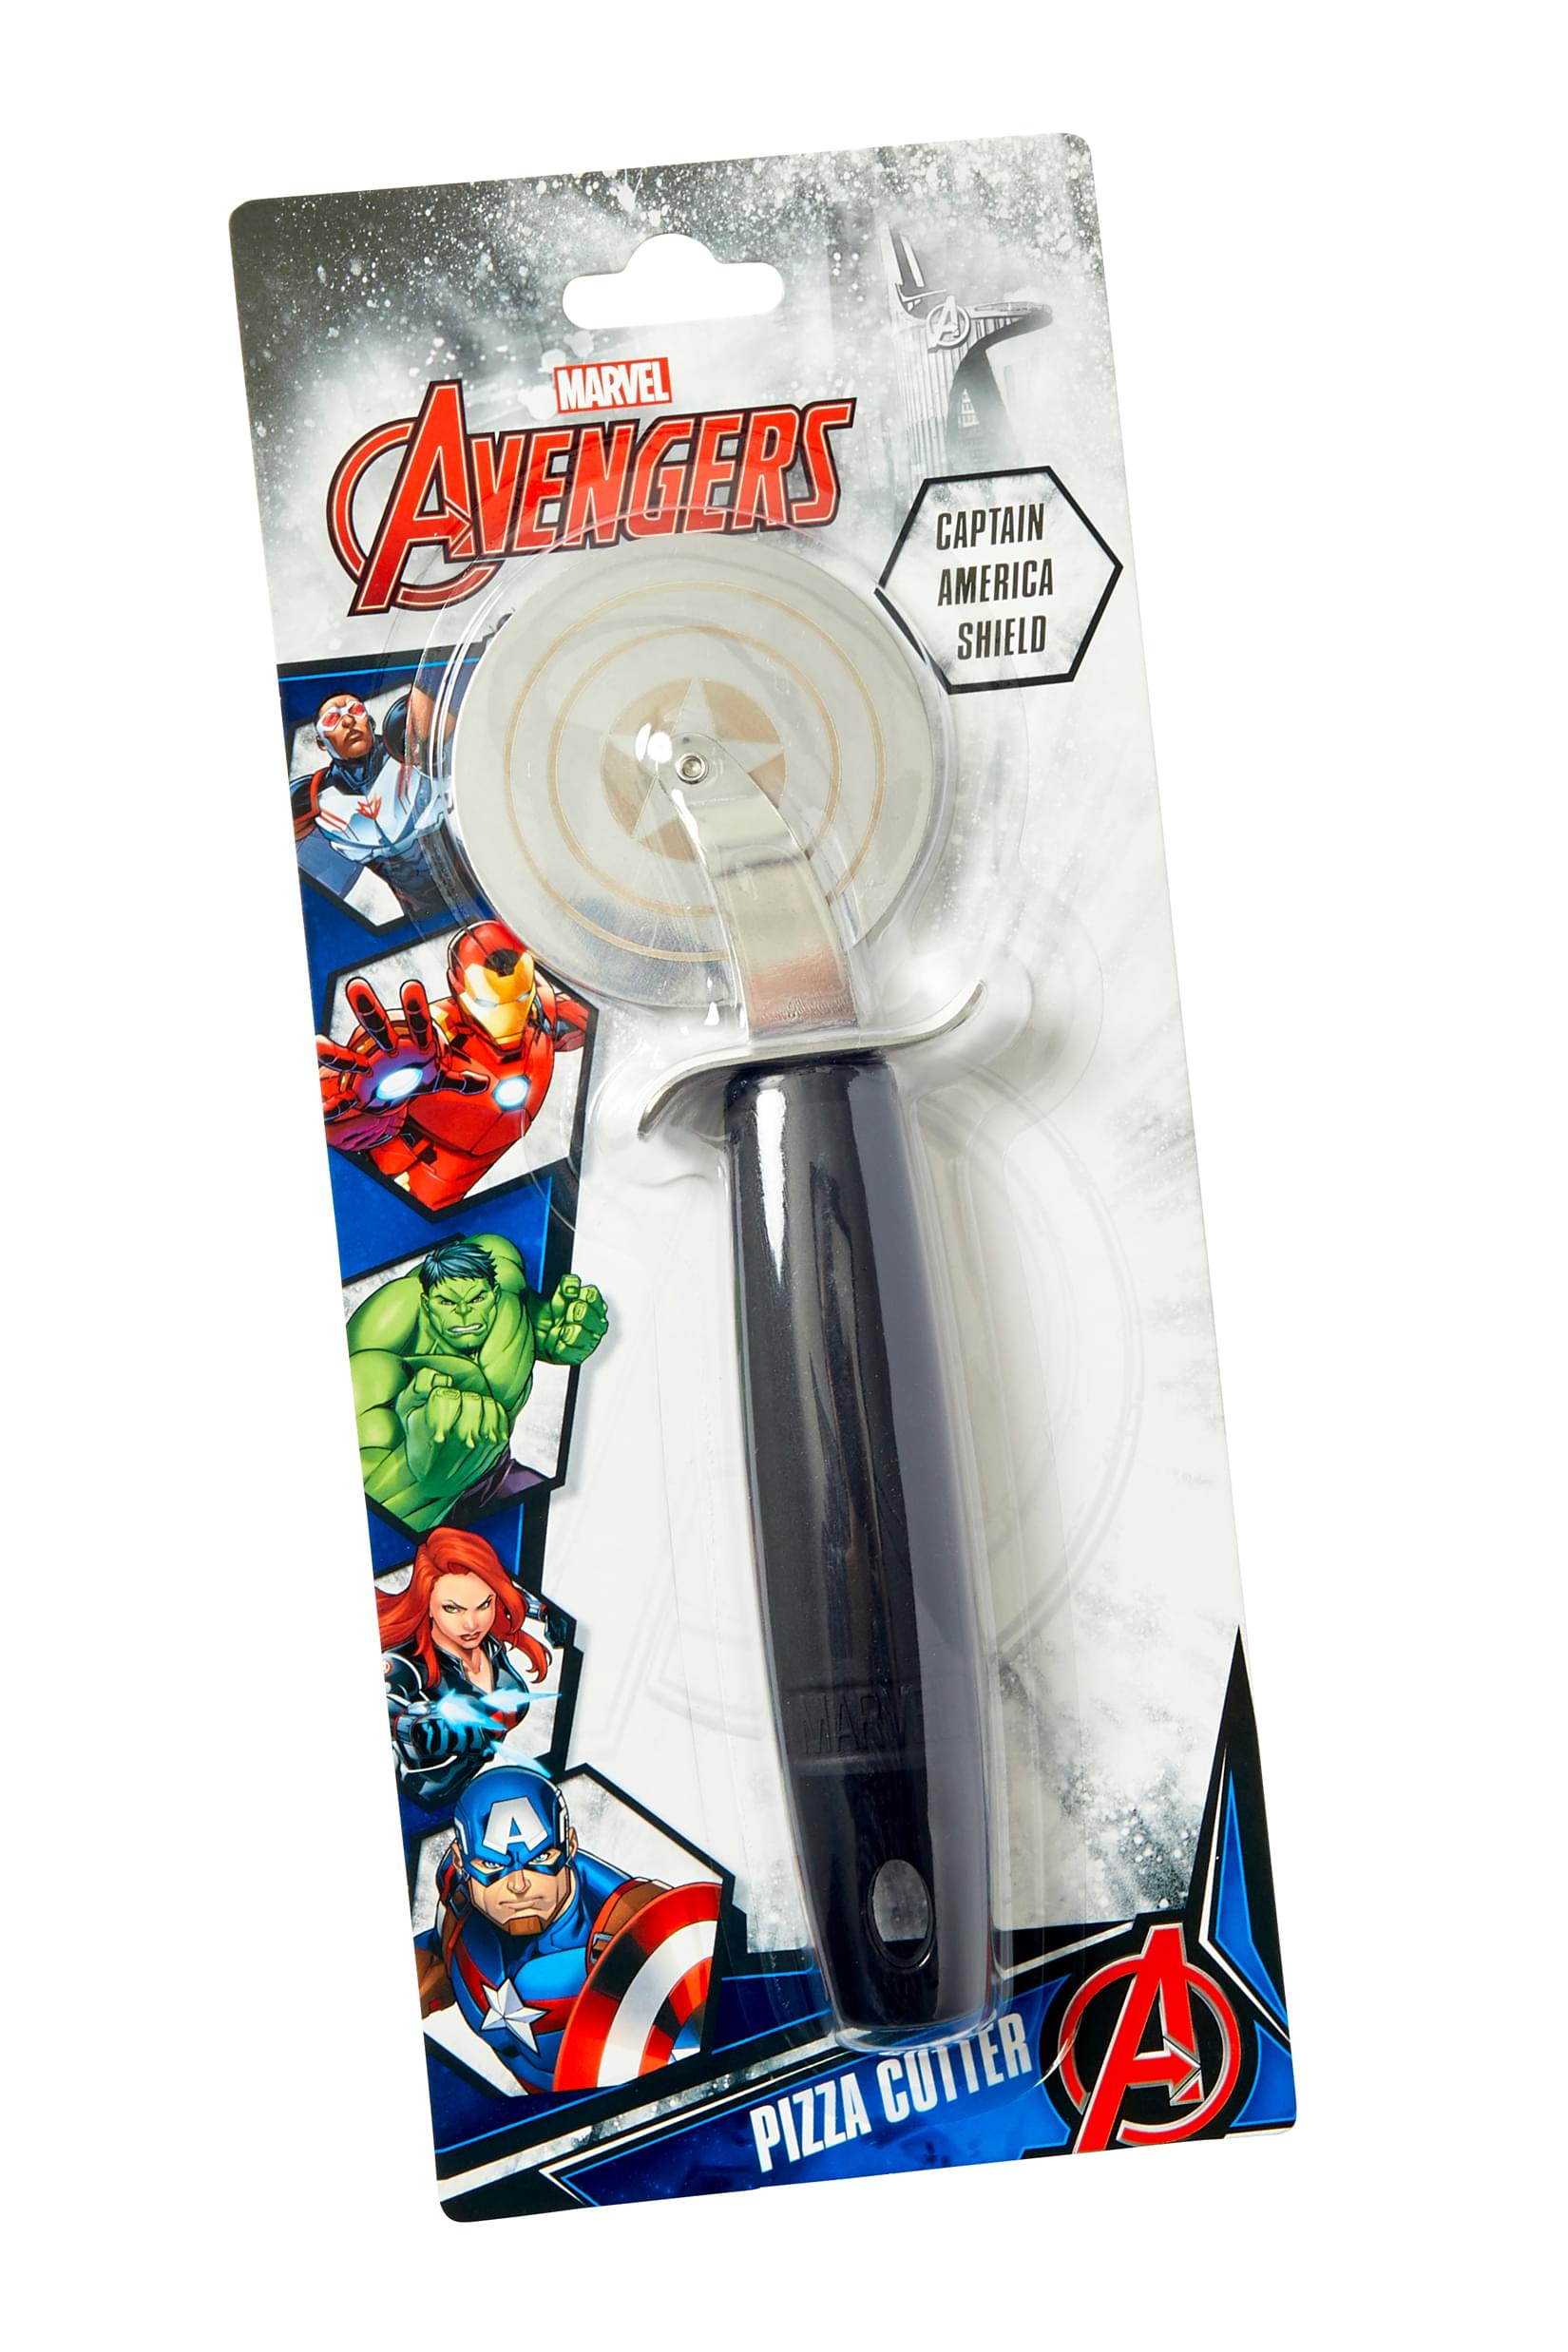 Marvel's Captain America Shield Pizza Cutter